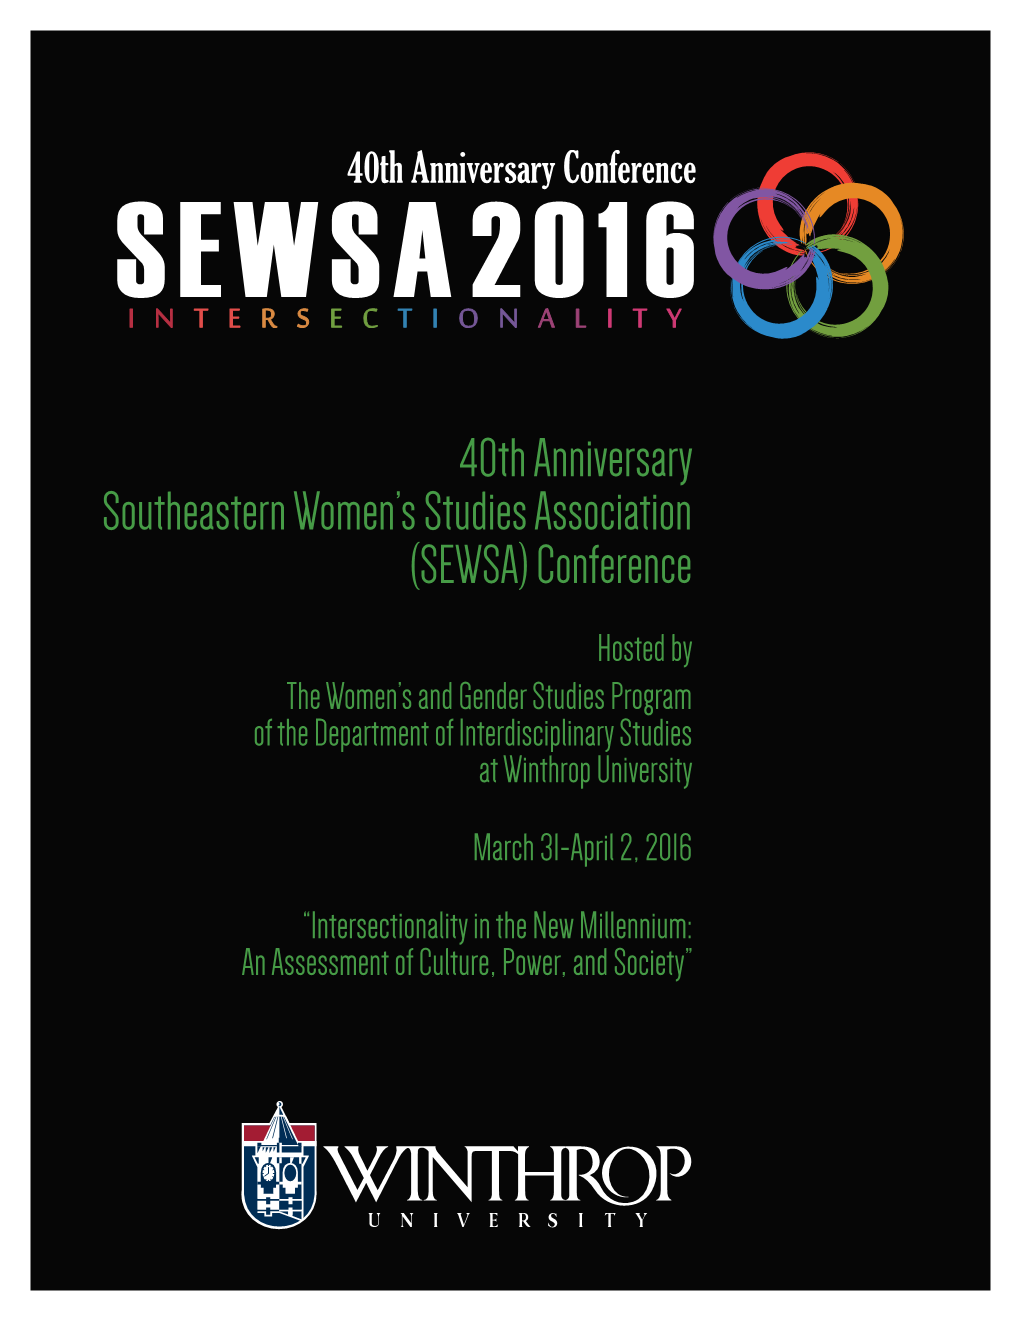 (SEWSA) Conference